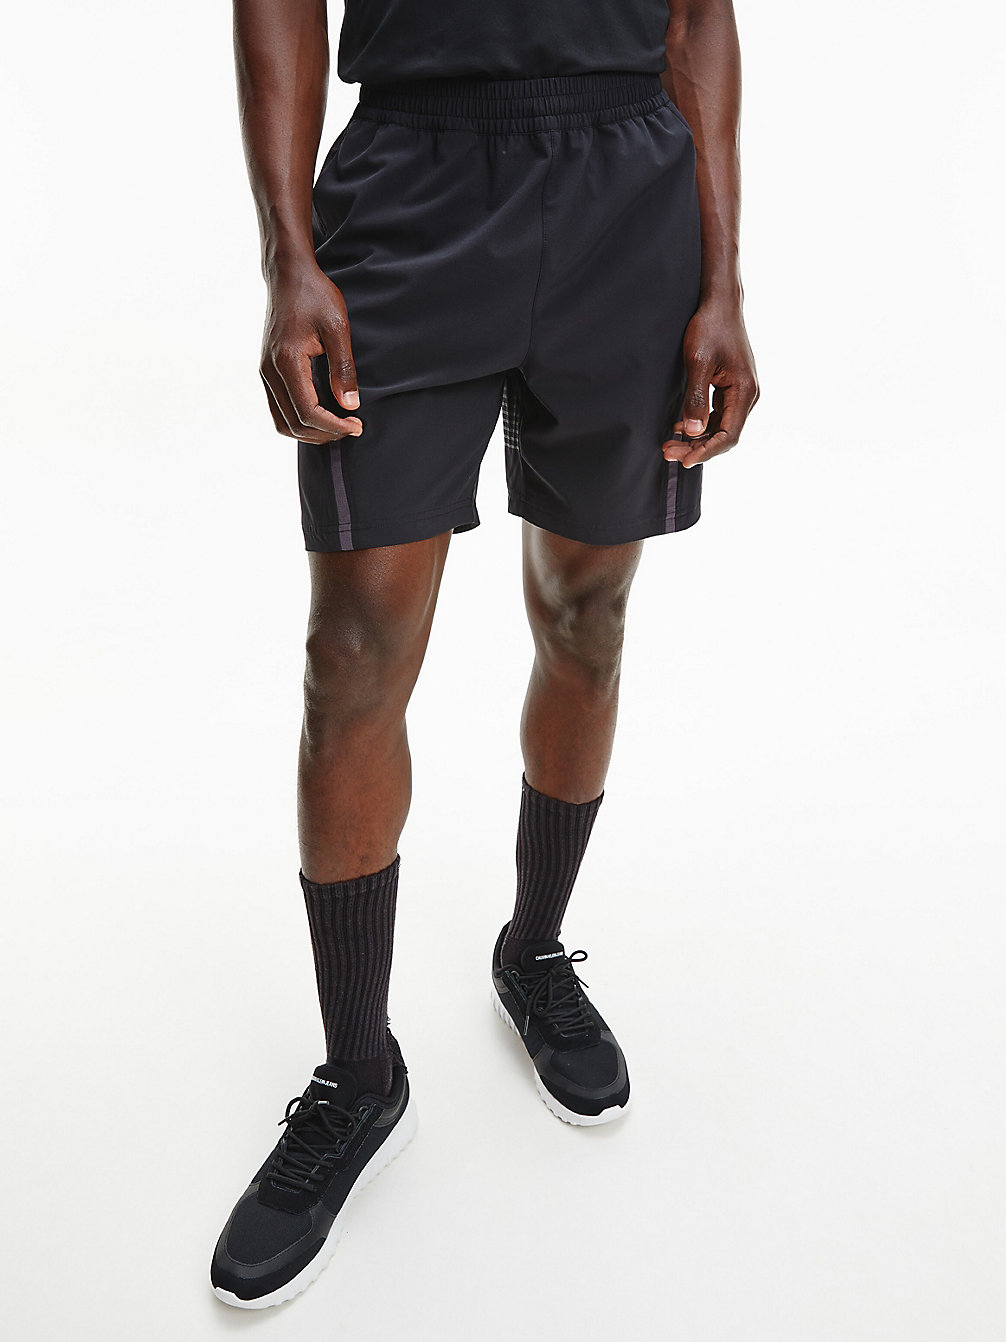 CK BLACK/ PERISCOPE/ACID LIME Gym Shorts undefined men Calvin Klein